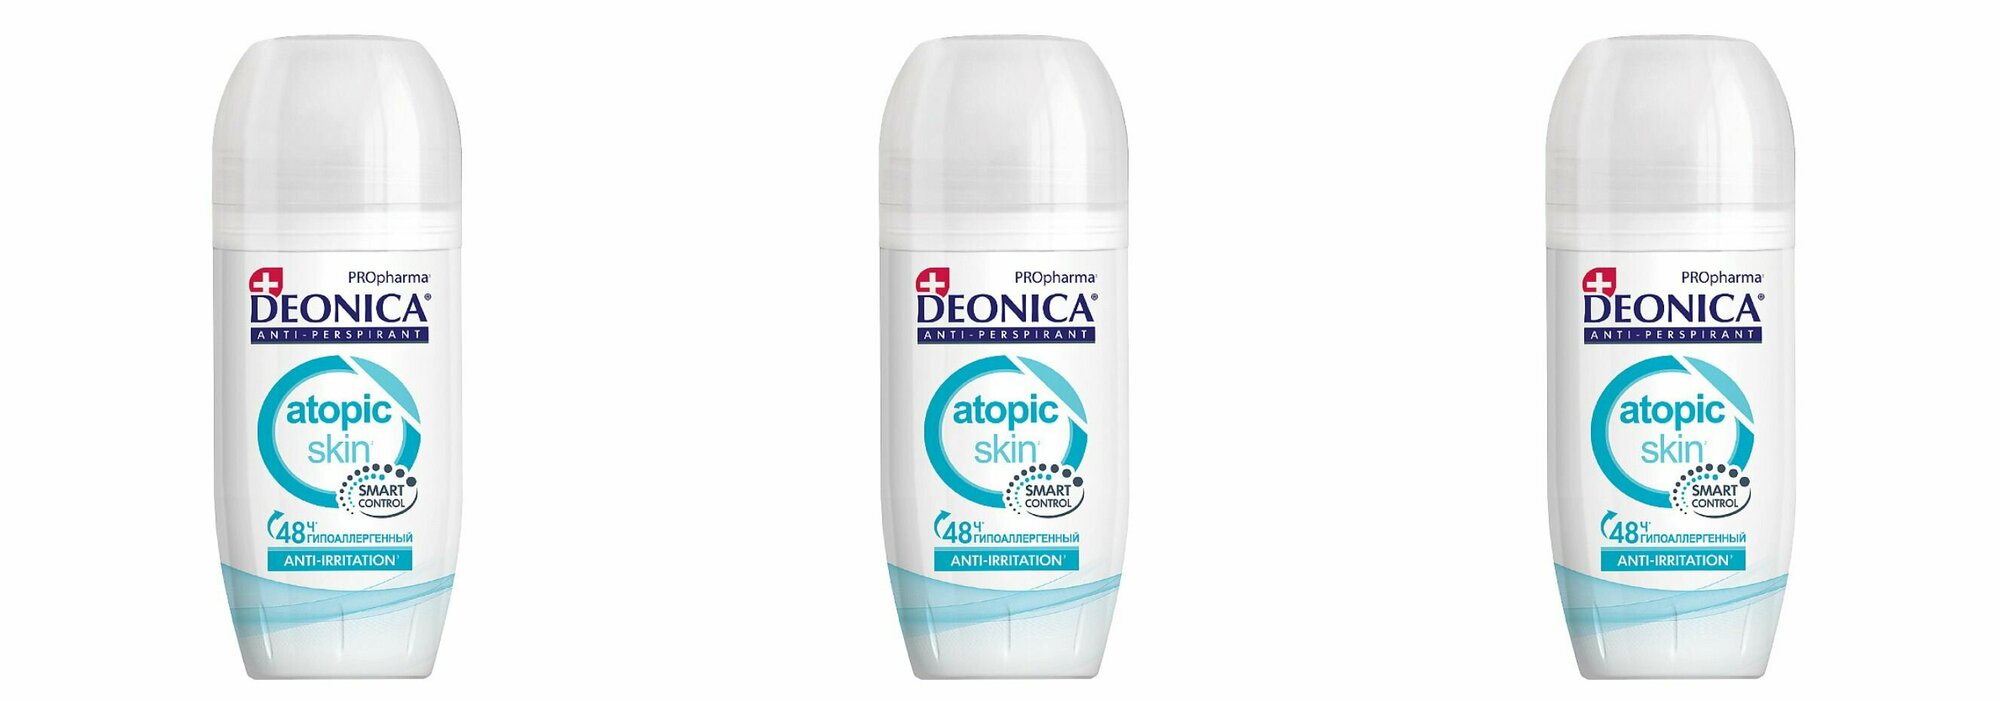 Deonica Антиперспирант ролик Propharma Atopic skin, 50 мл,3 шт